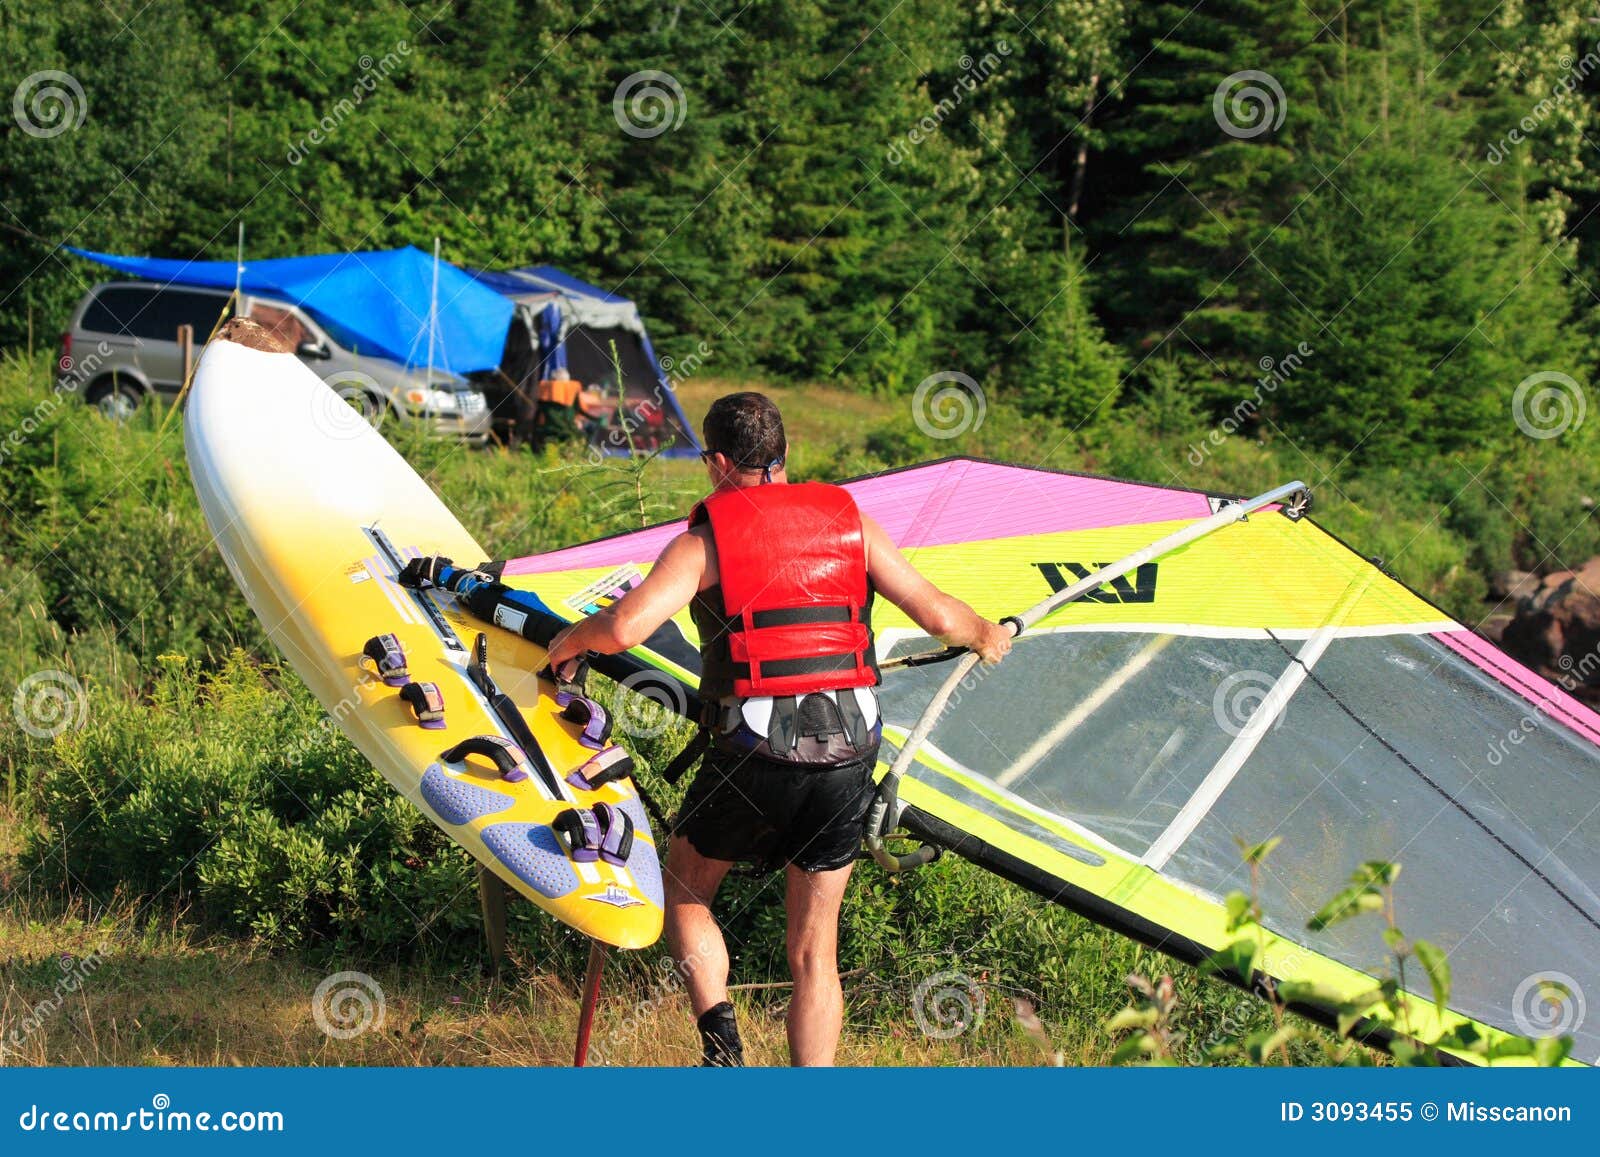 windsurf and camping